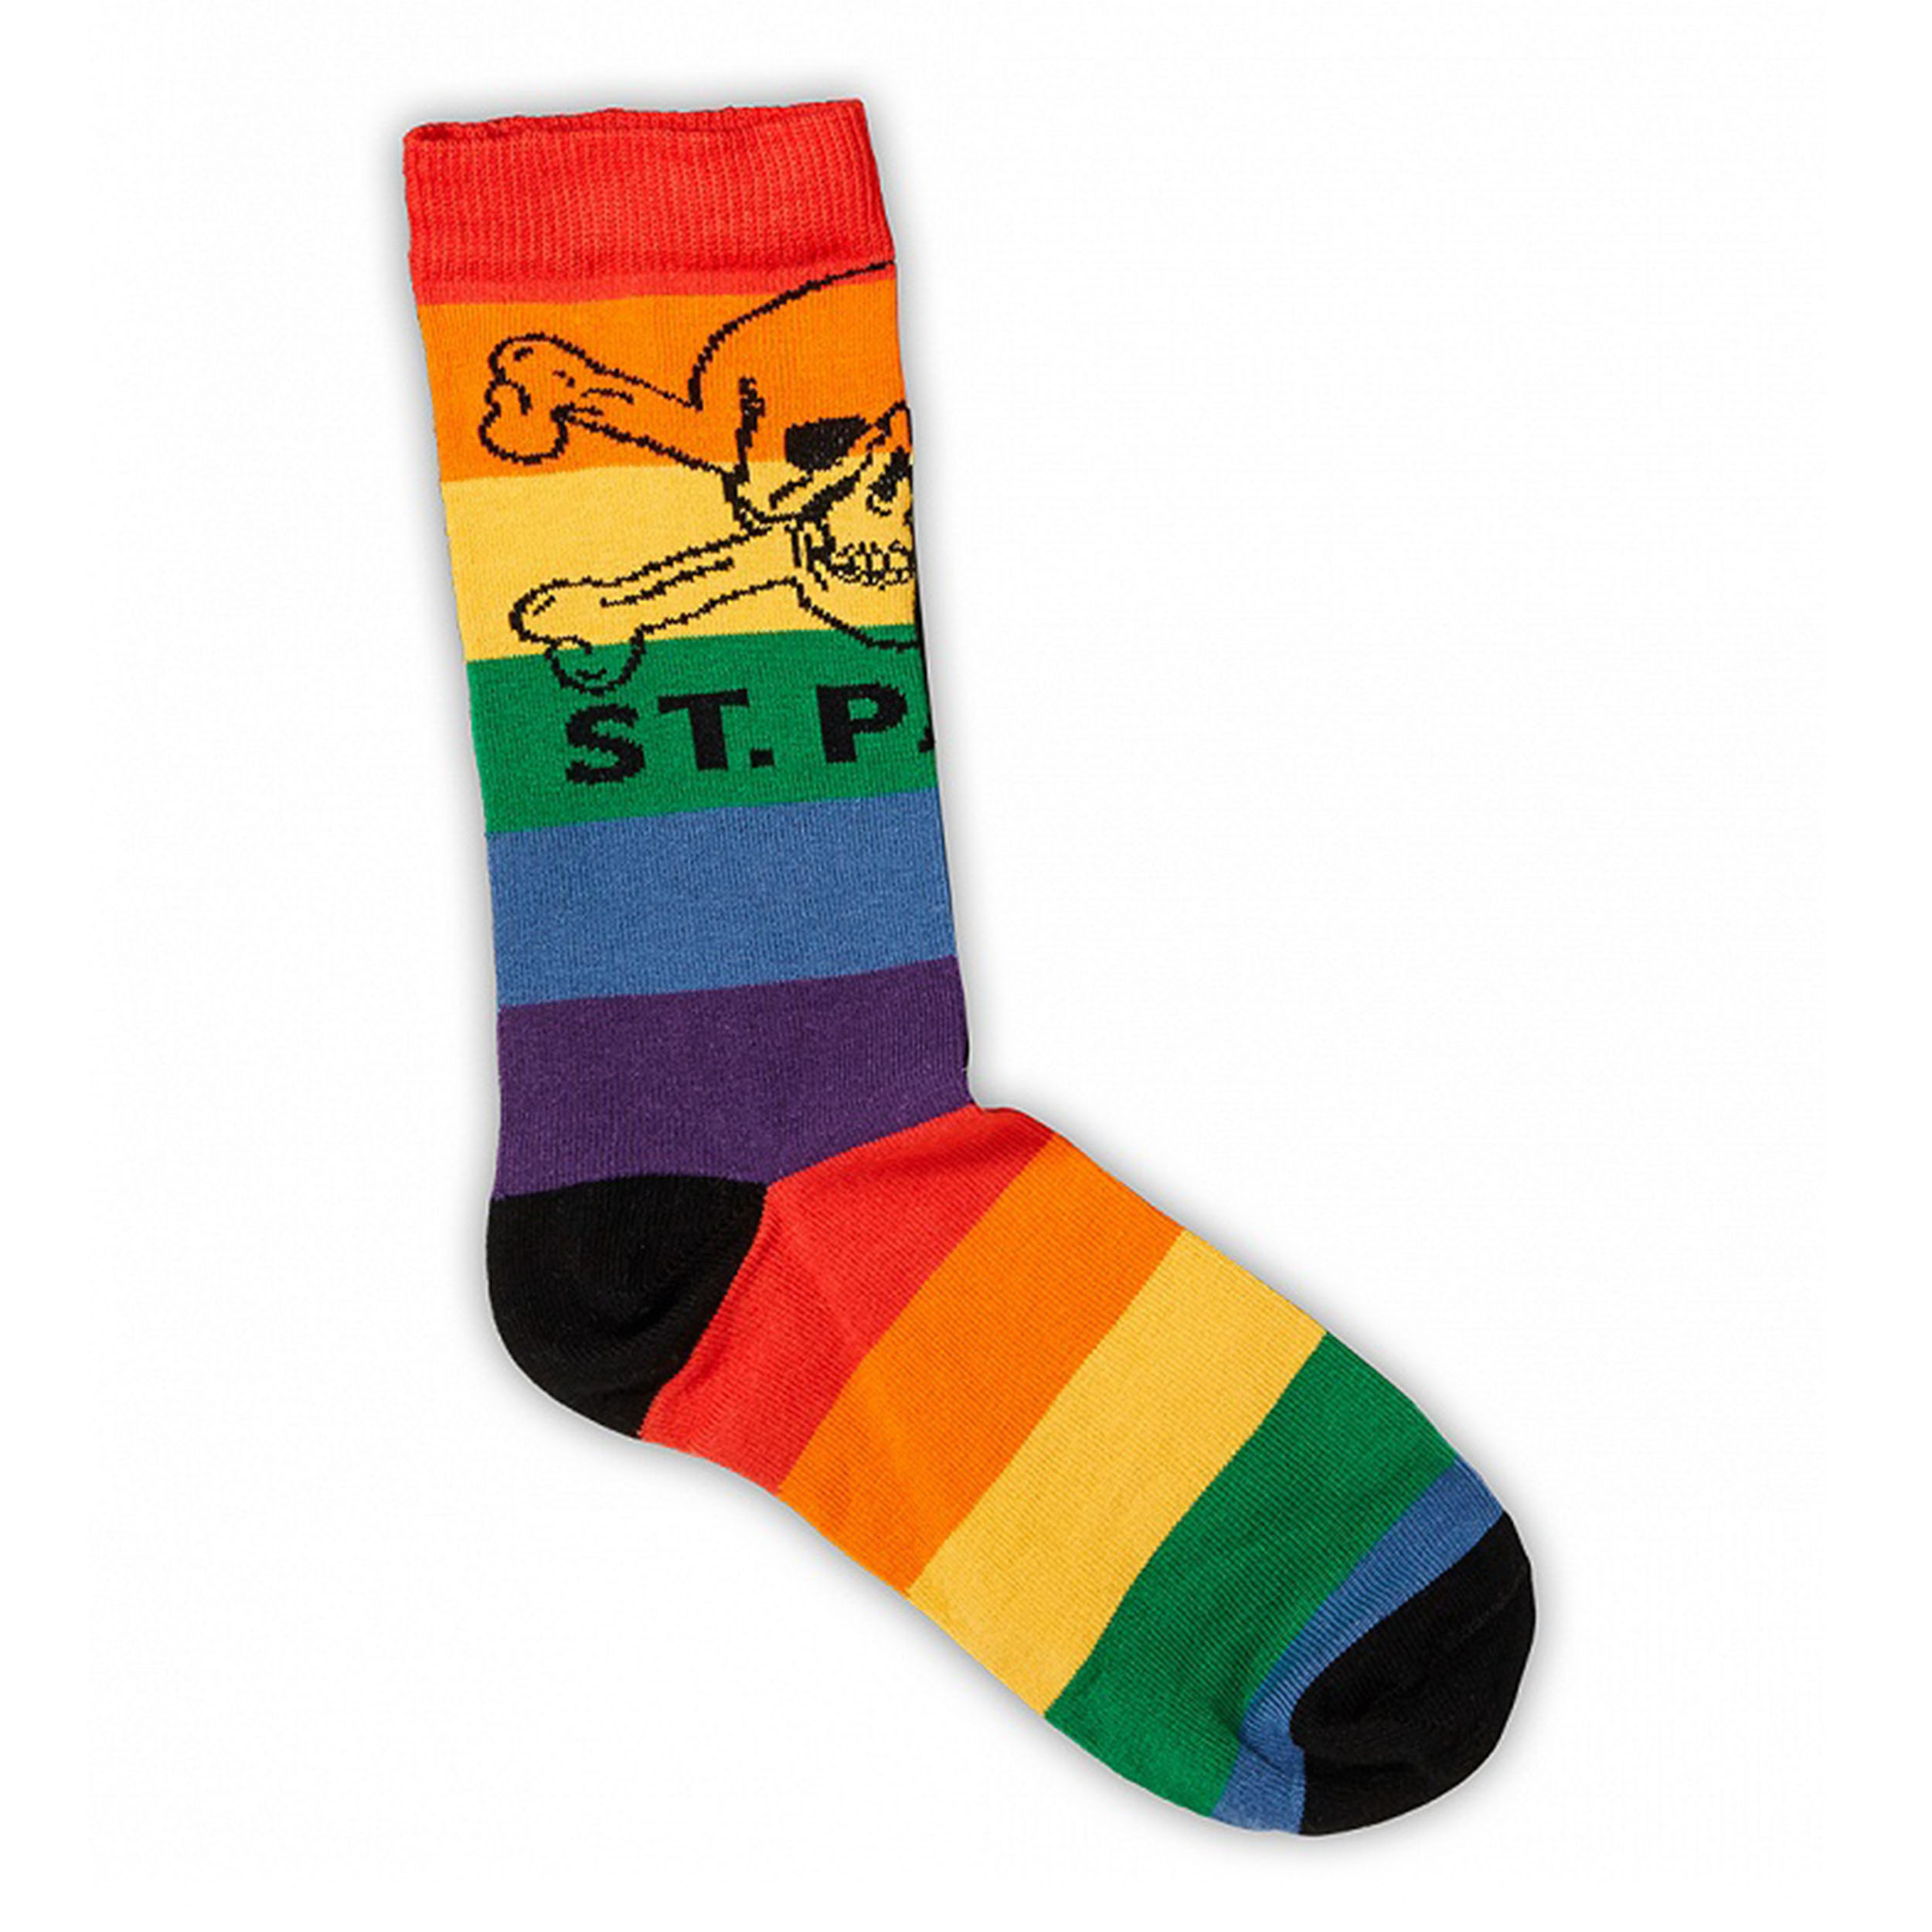 St.Pauli sokken Rainbow stripes